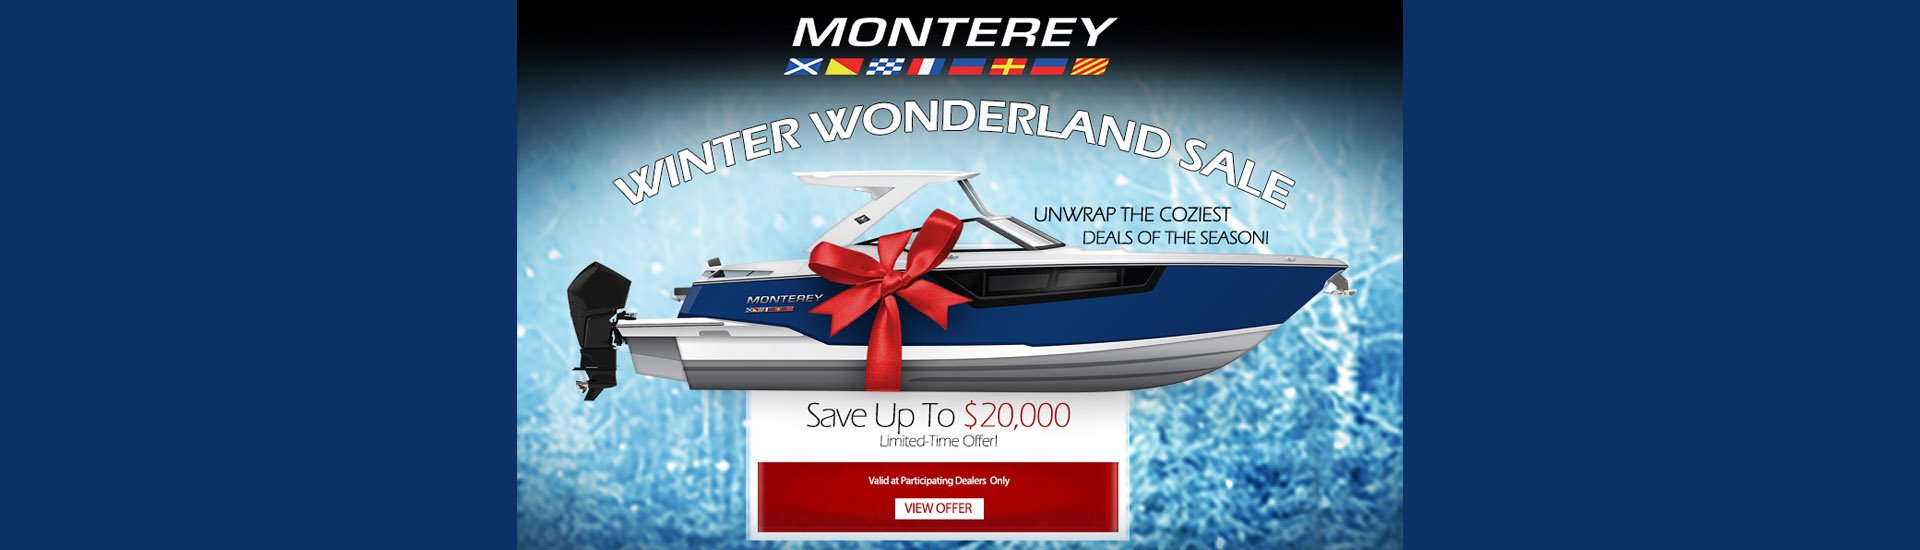 Monterey Boat Sale